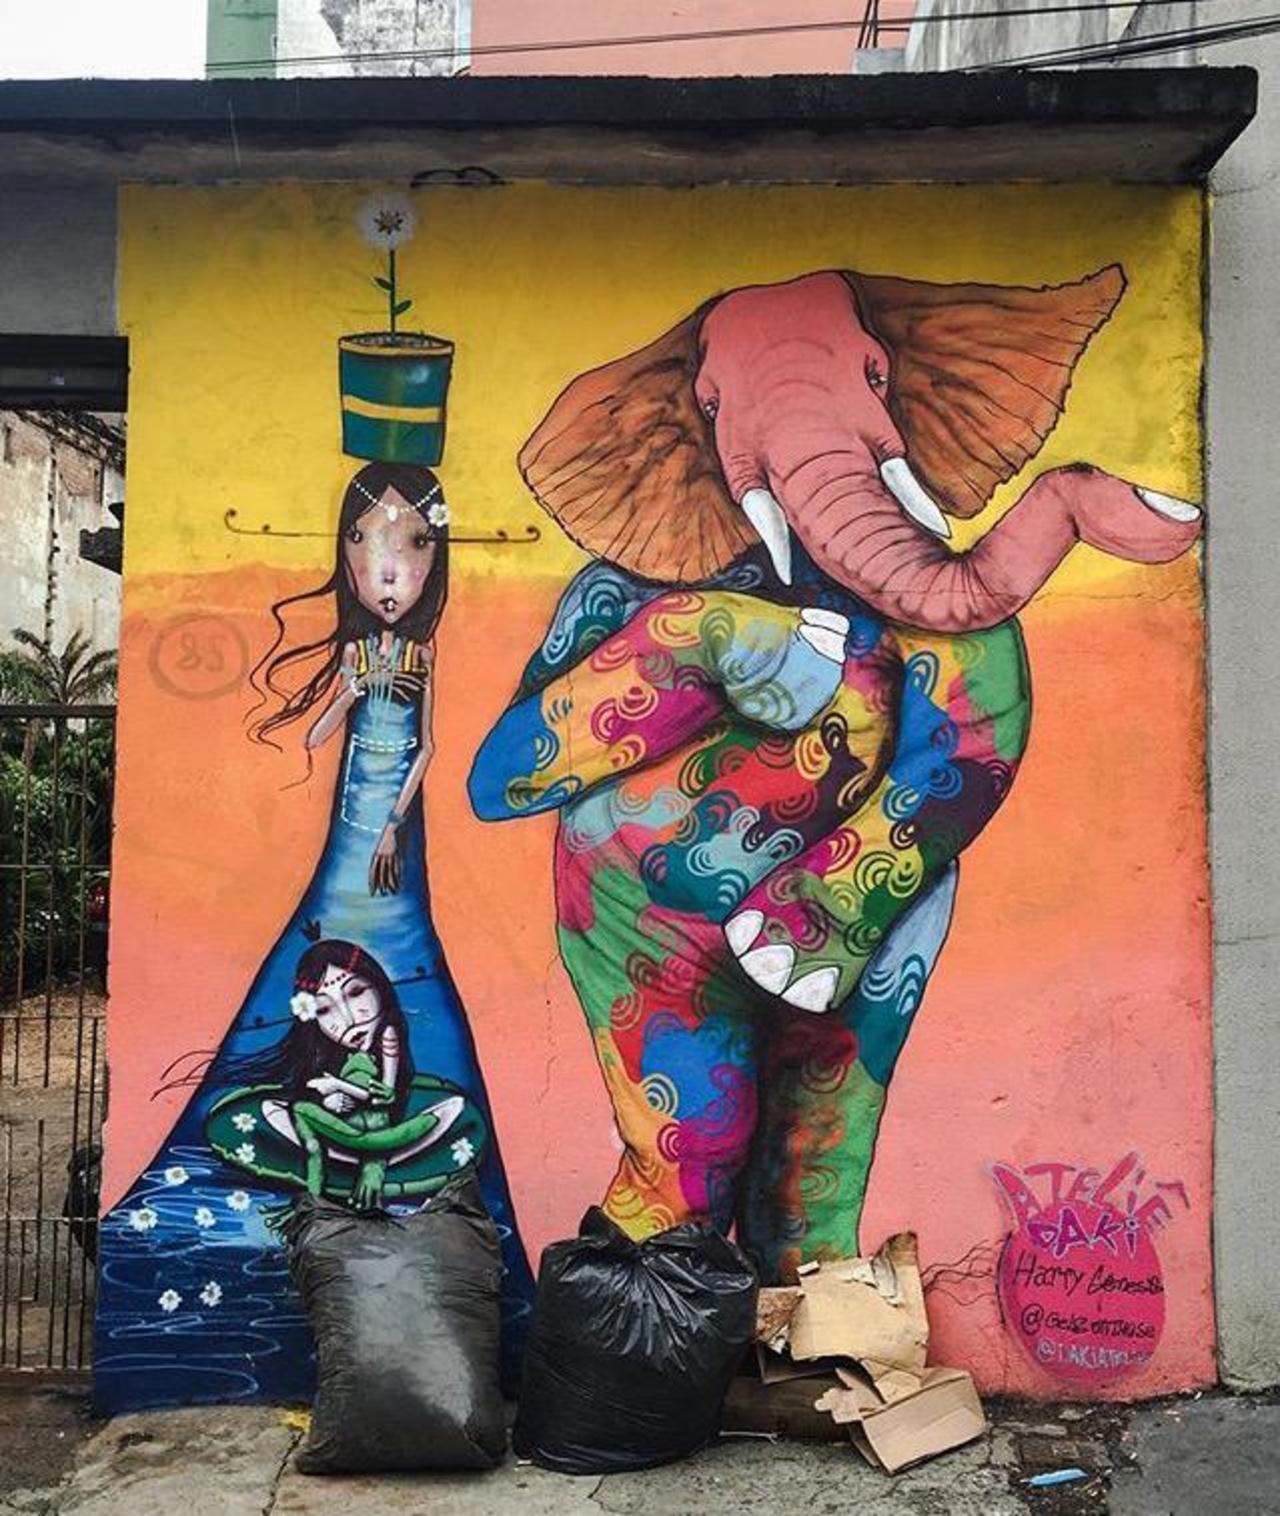 Street Art by Harry Geneis & Gelson in São Paulo 

#art #mural #graffiti #streetart http://t.co/SlLbhuMZfD … … …… http://twitter.com/GoogleStreetArt/status/648016473831645184/photo/1/large?utm_source=fb&utm_medium=fb&utm_campaign=charlesjackso14&utm_content=648021458468360192